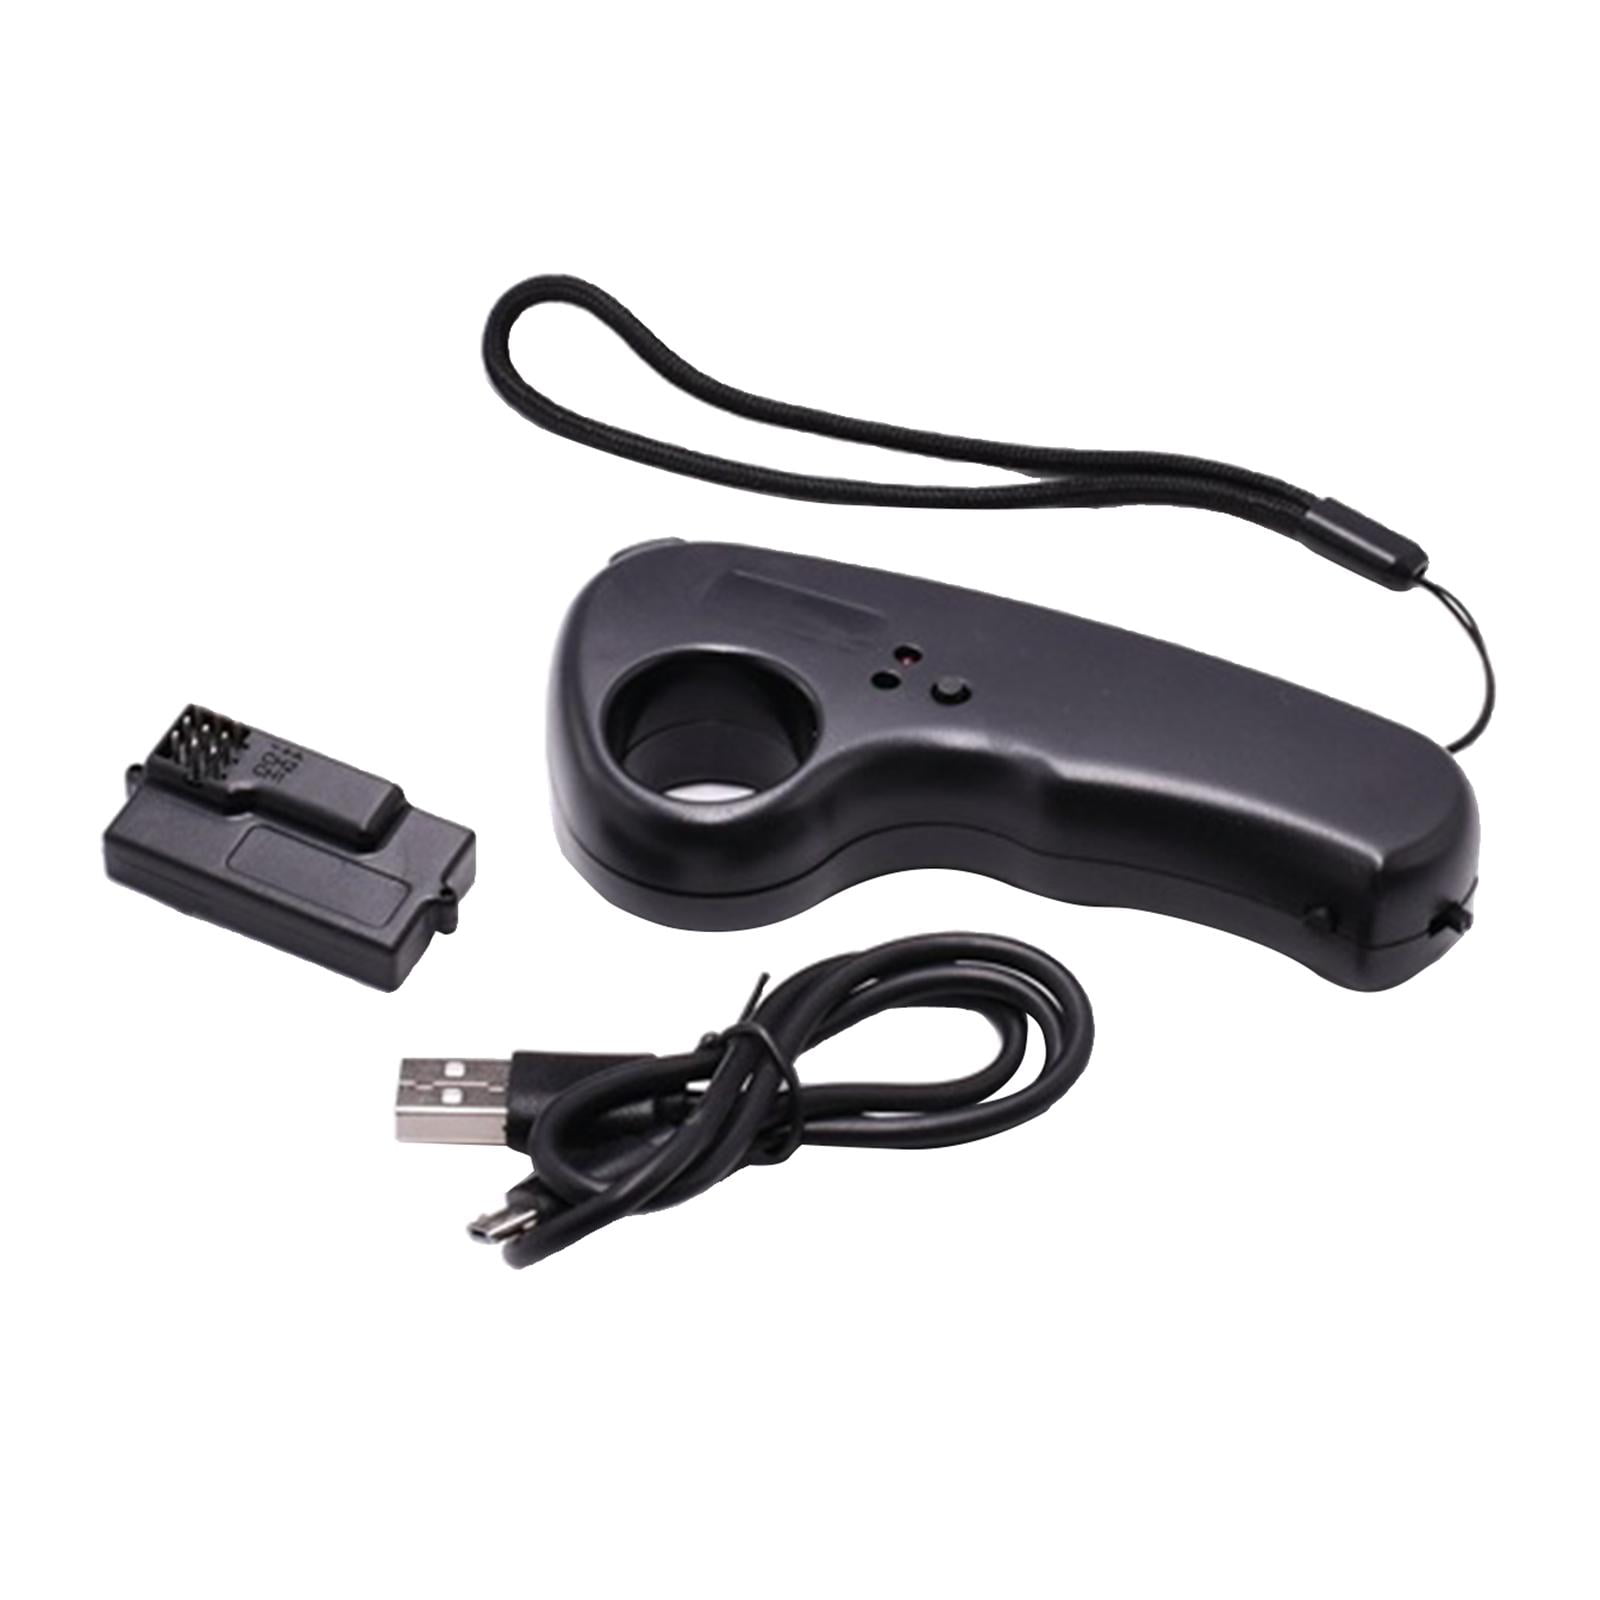 Remote Control for DIY Electric Skateboard/Long Board Remote Controller with Universal Remote(2 Channel ) Walmart.com